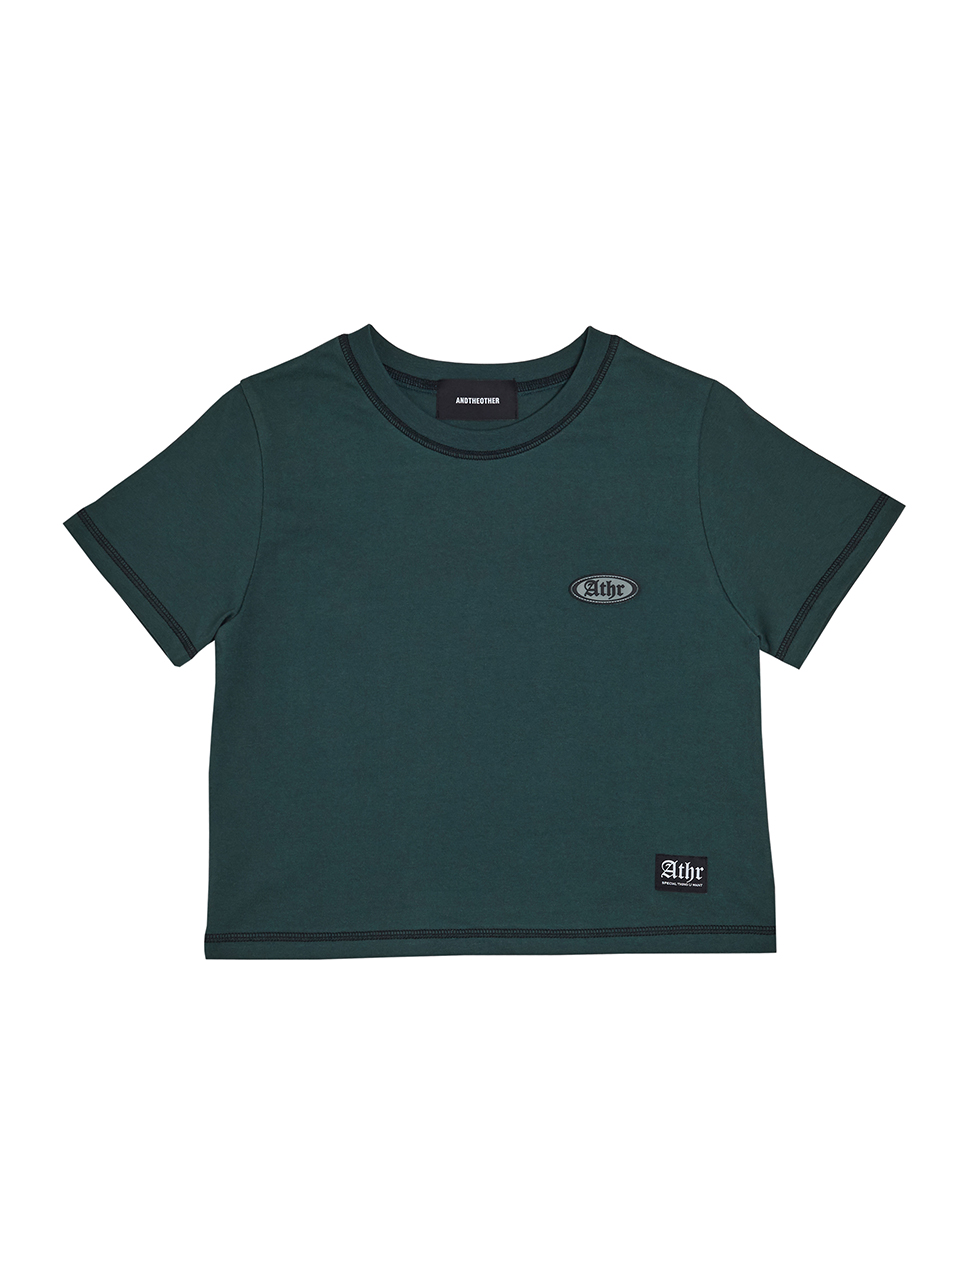 Green ATHR Silicon T-shirt